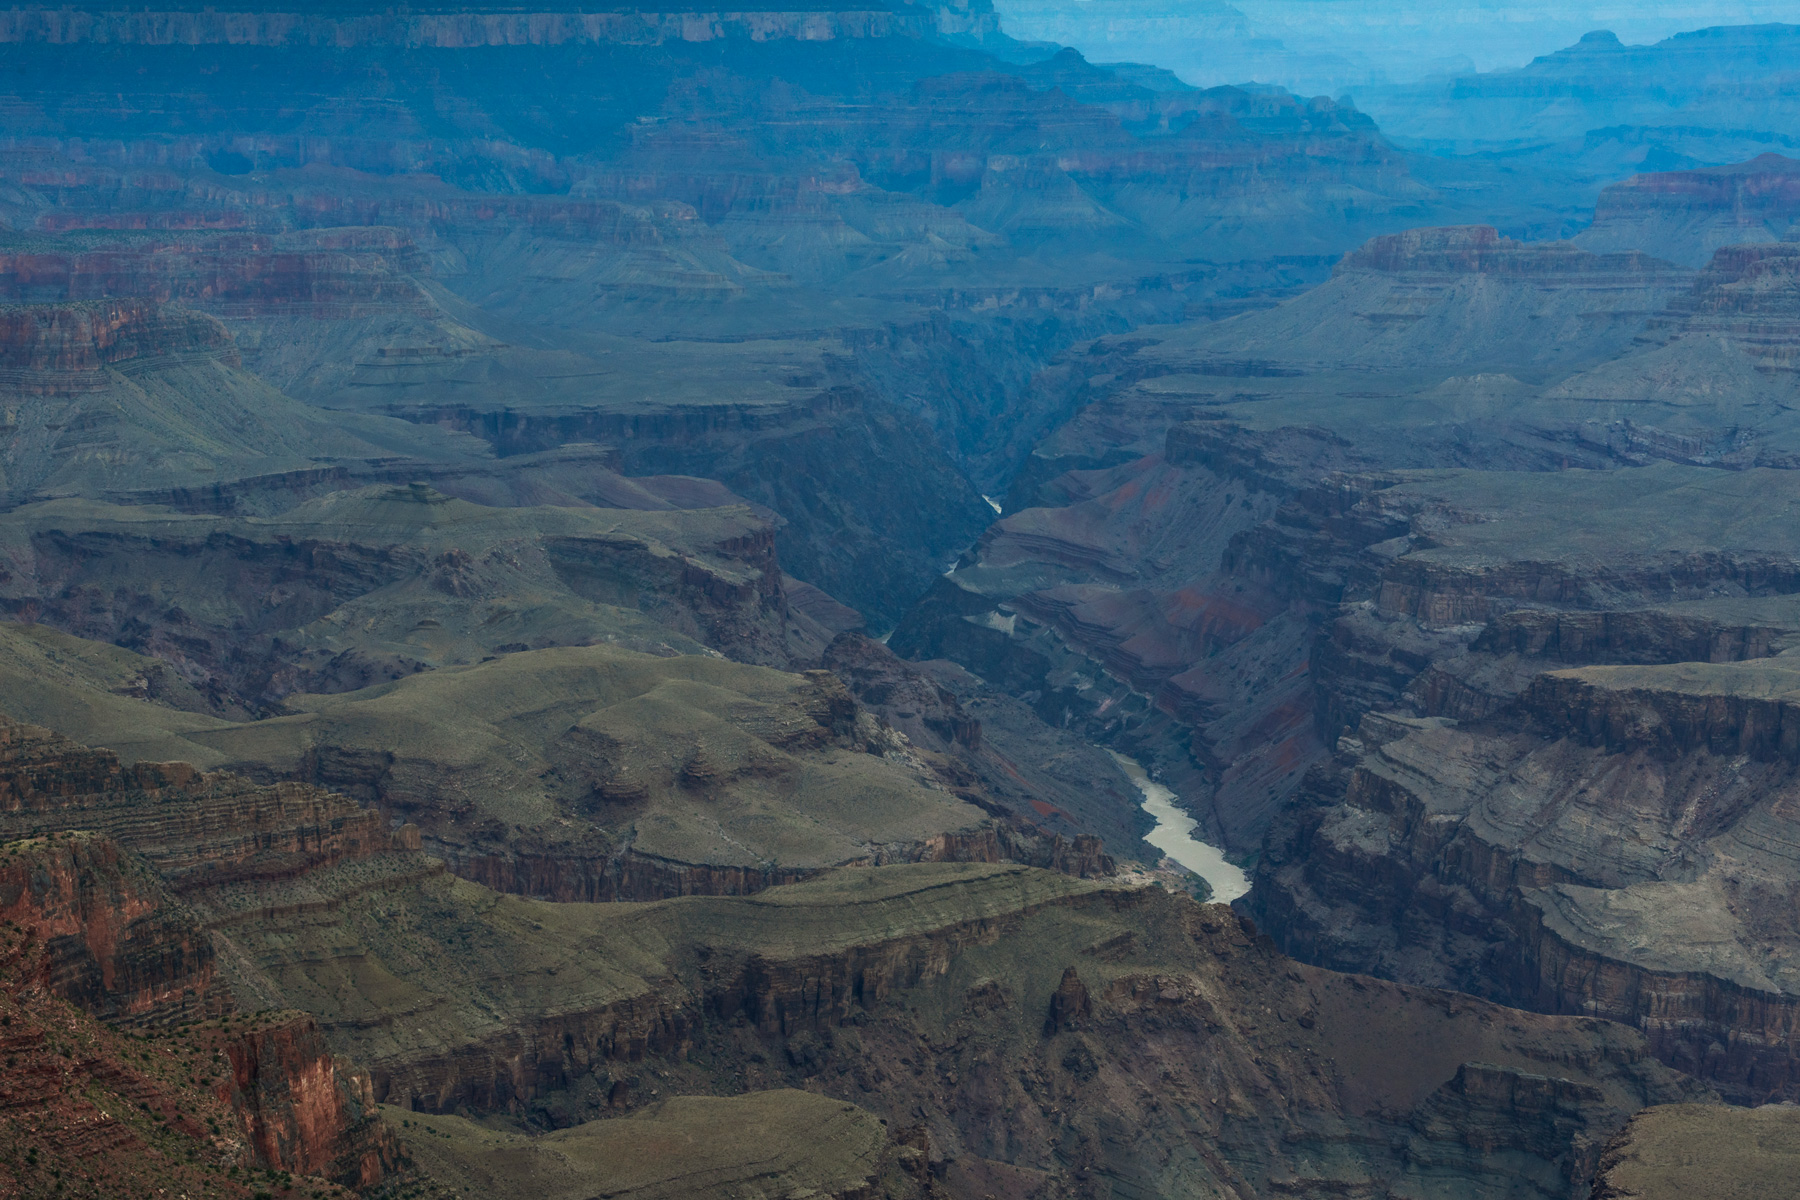 Grand-Canyon-South-Rim-at-dusk.jpg